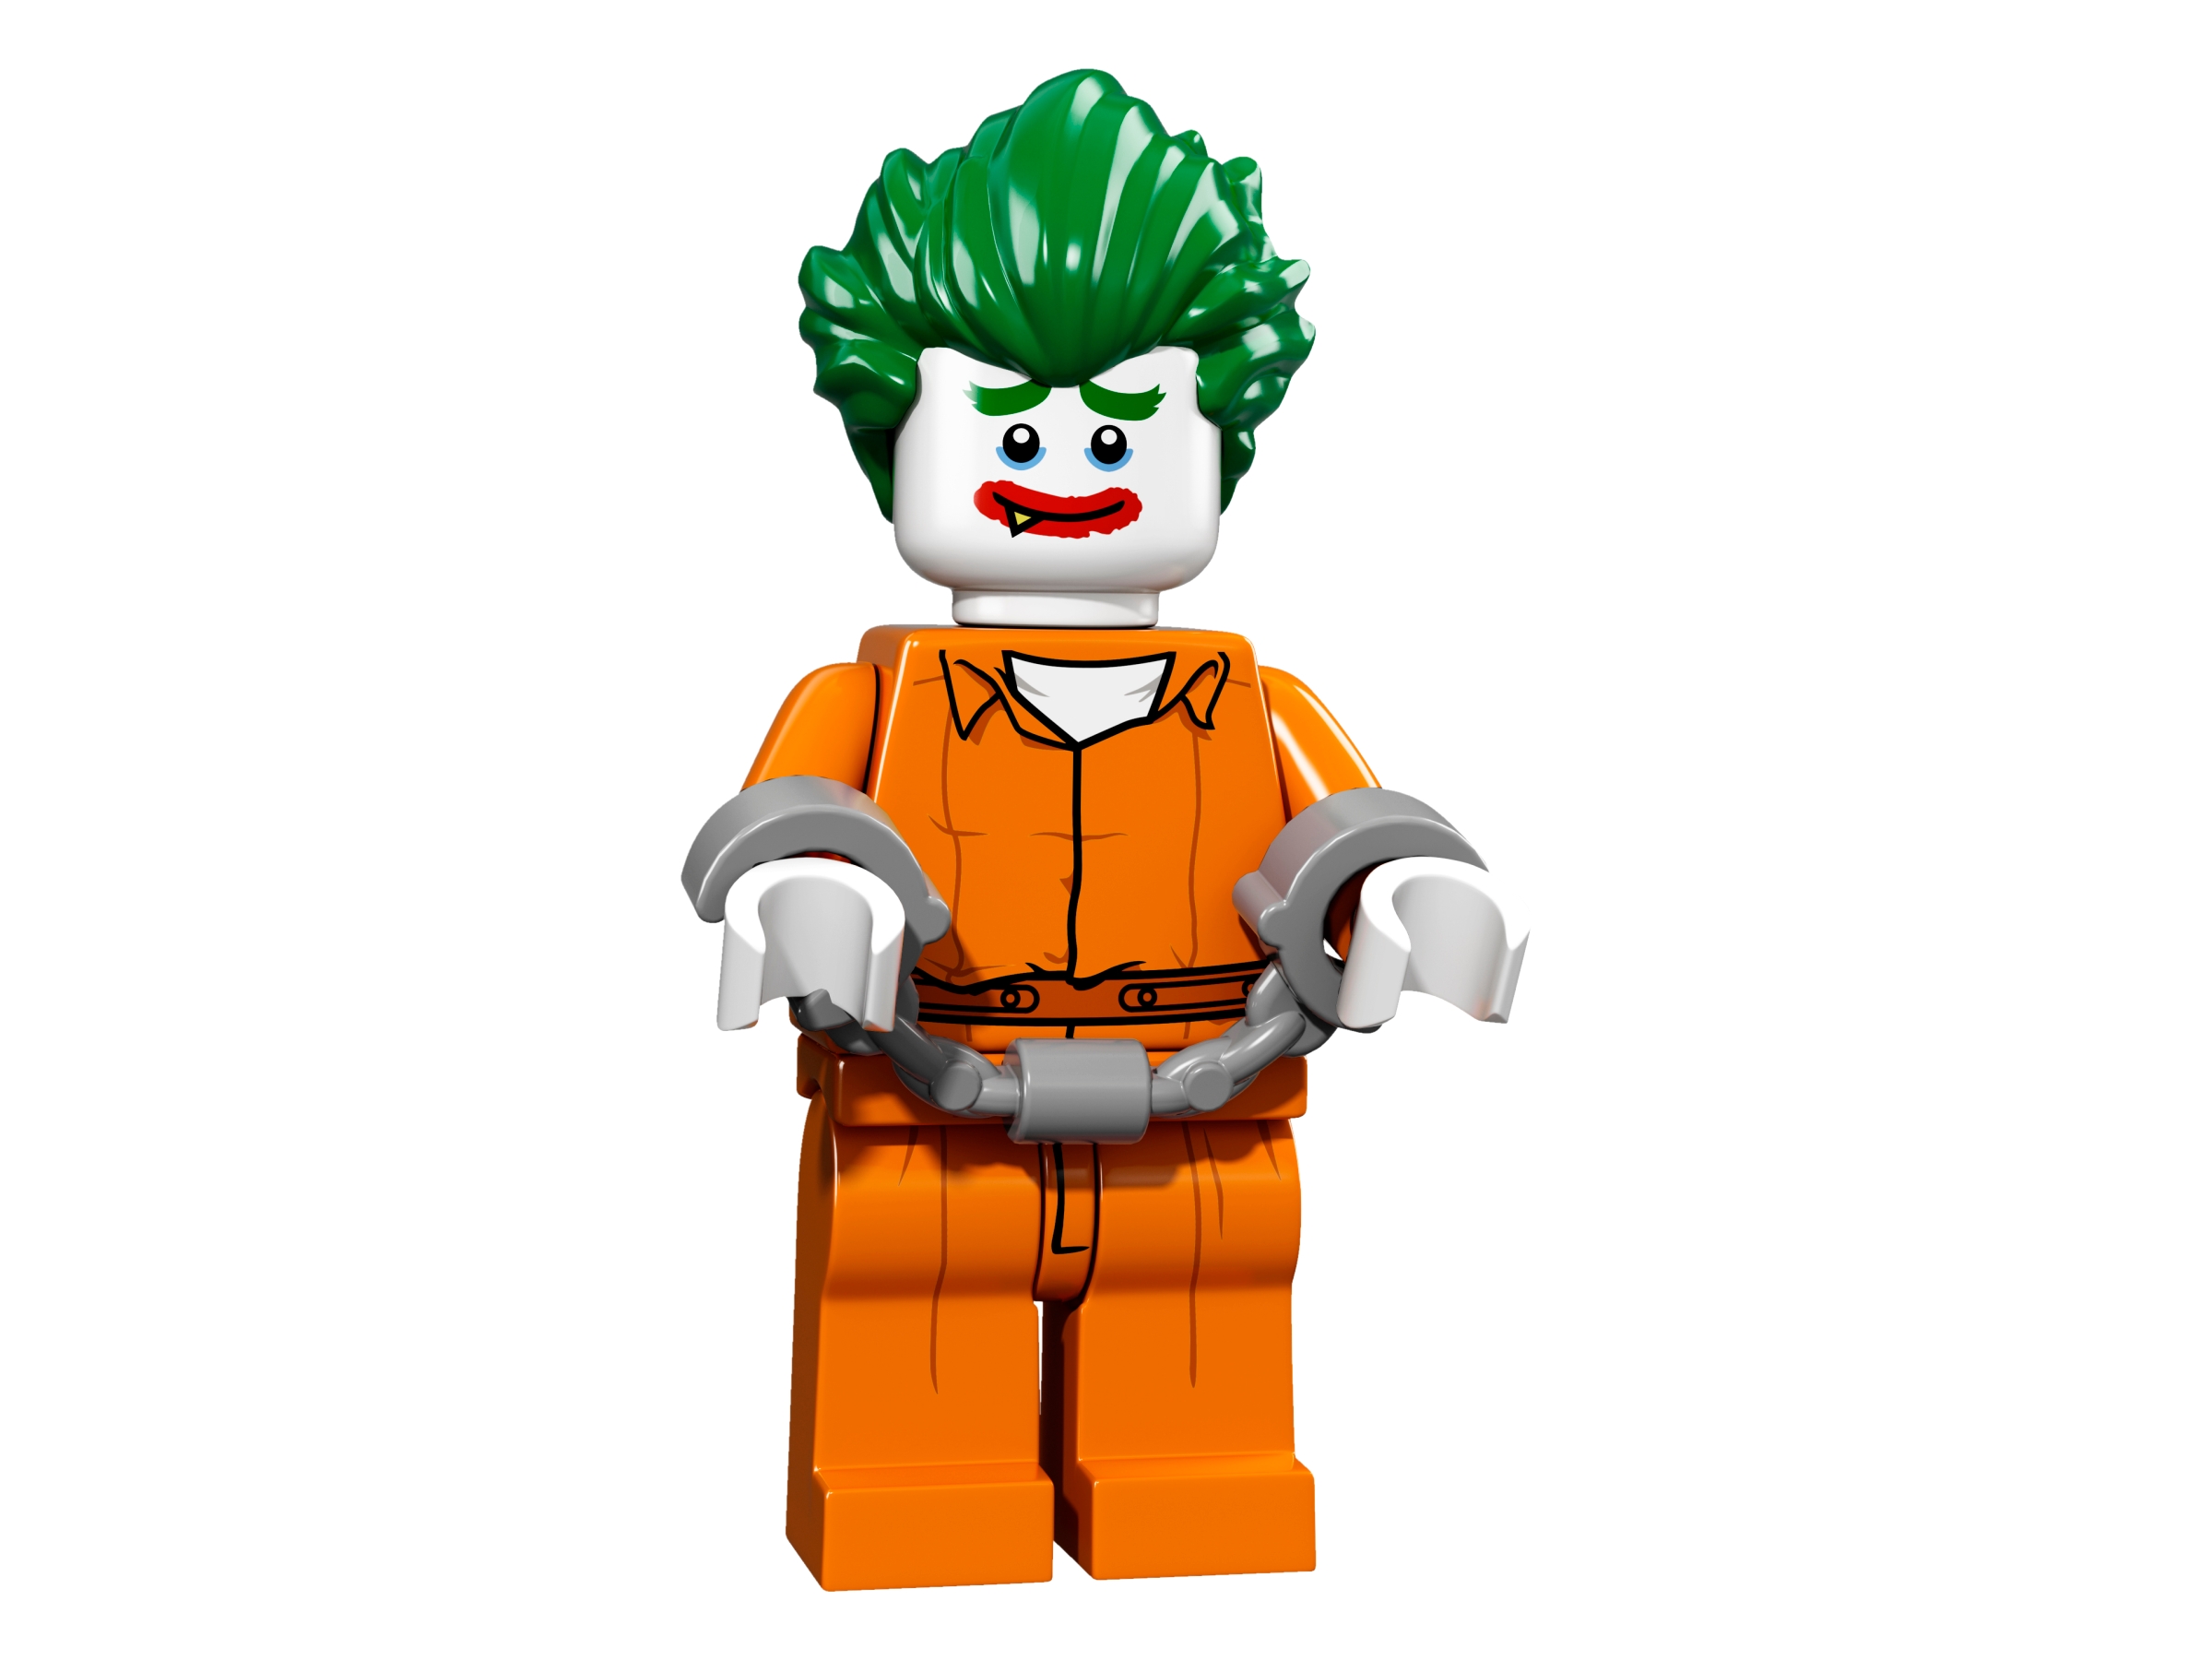 Details about   Lego March Harriet 71017 The LEGO Batman Movie Series 1 Minifigure